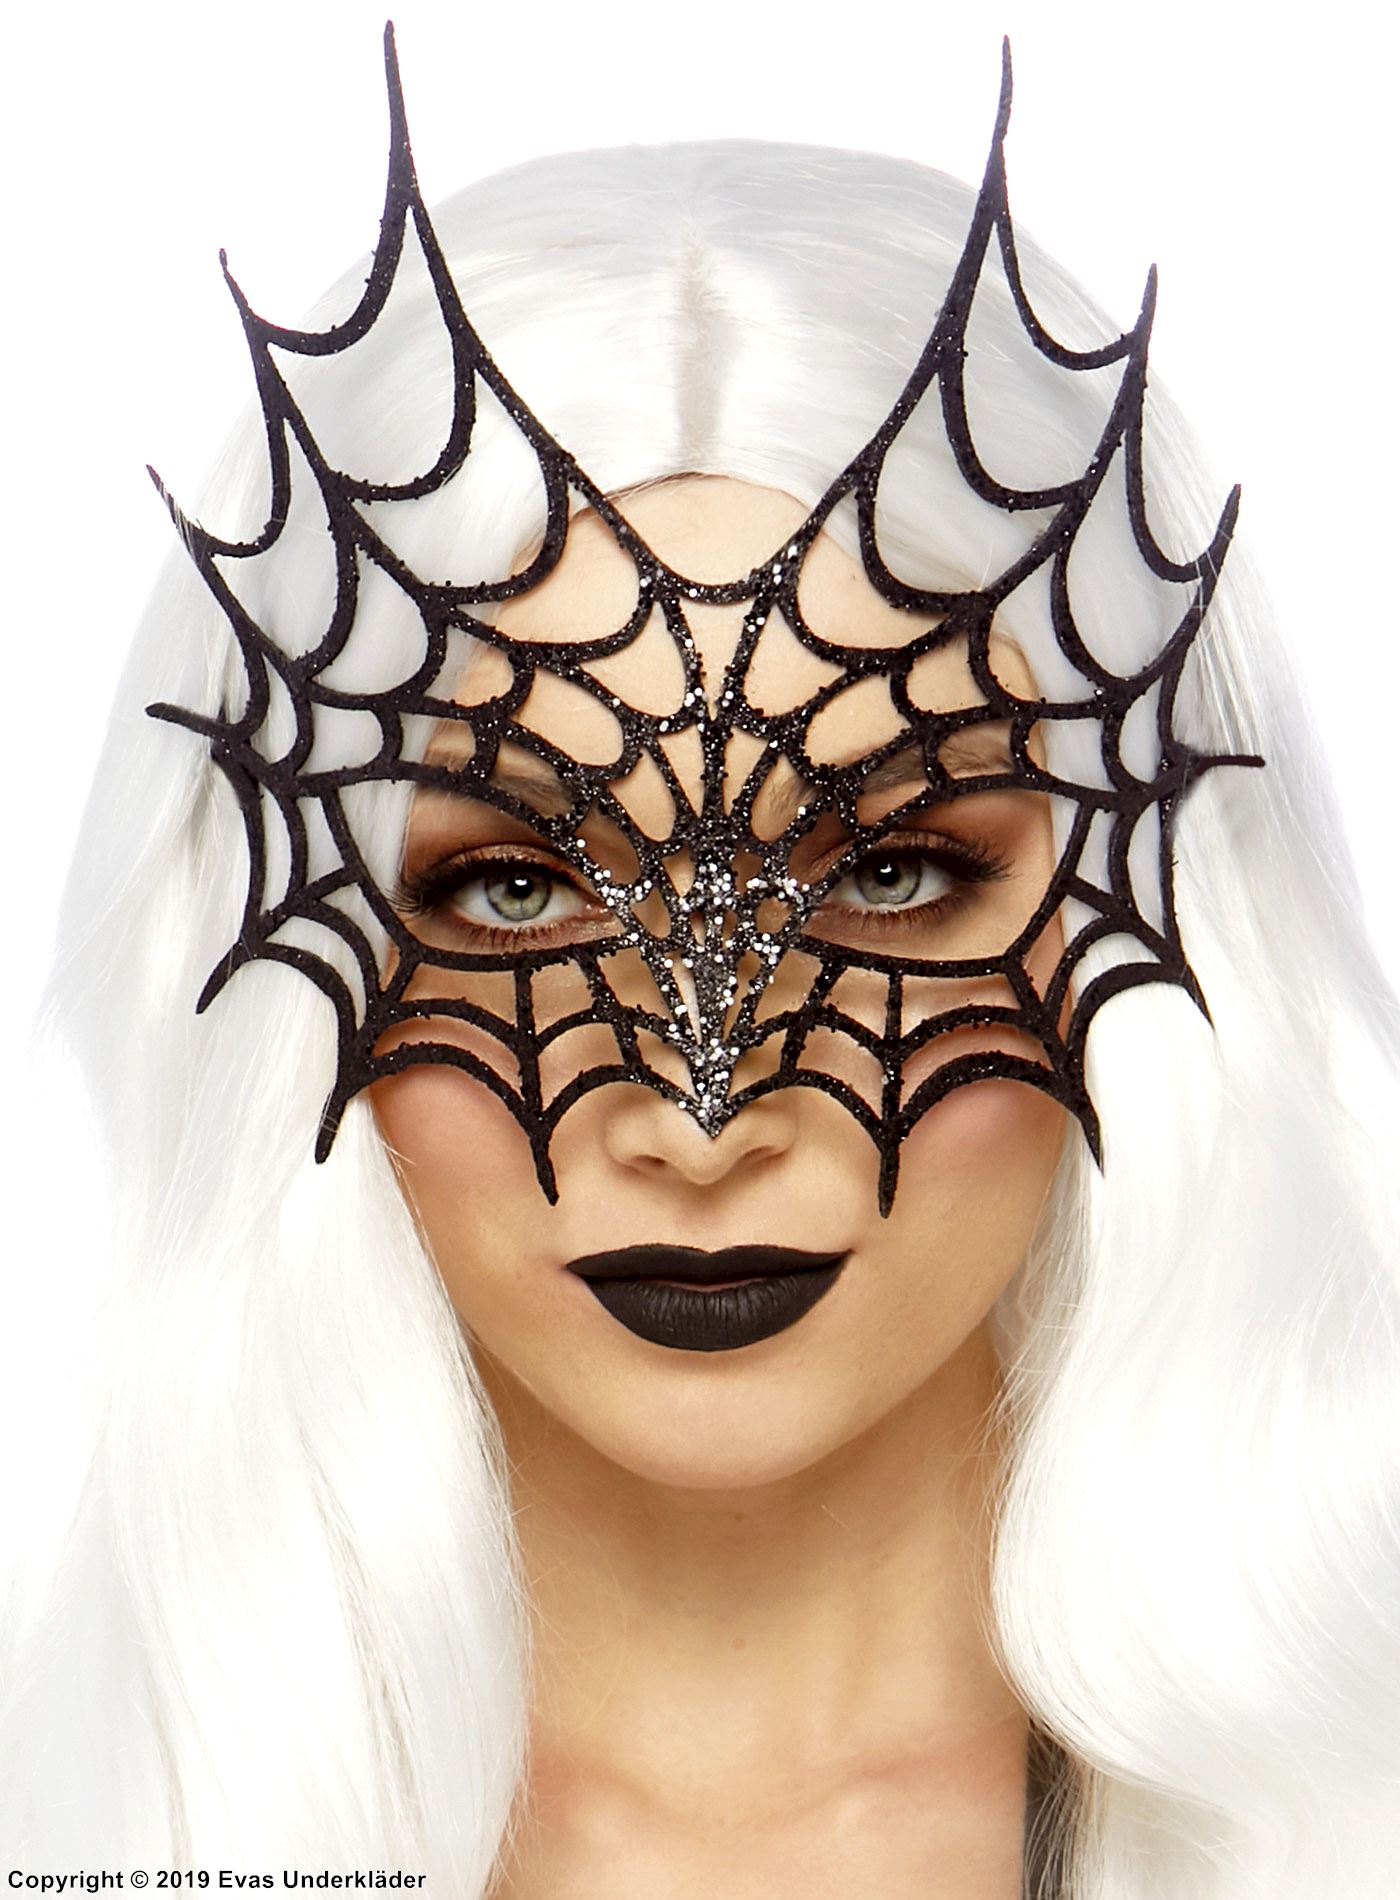 Costume mask, glitter, spider web